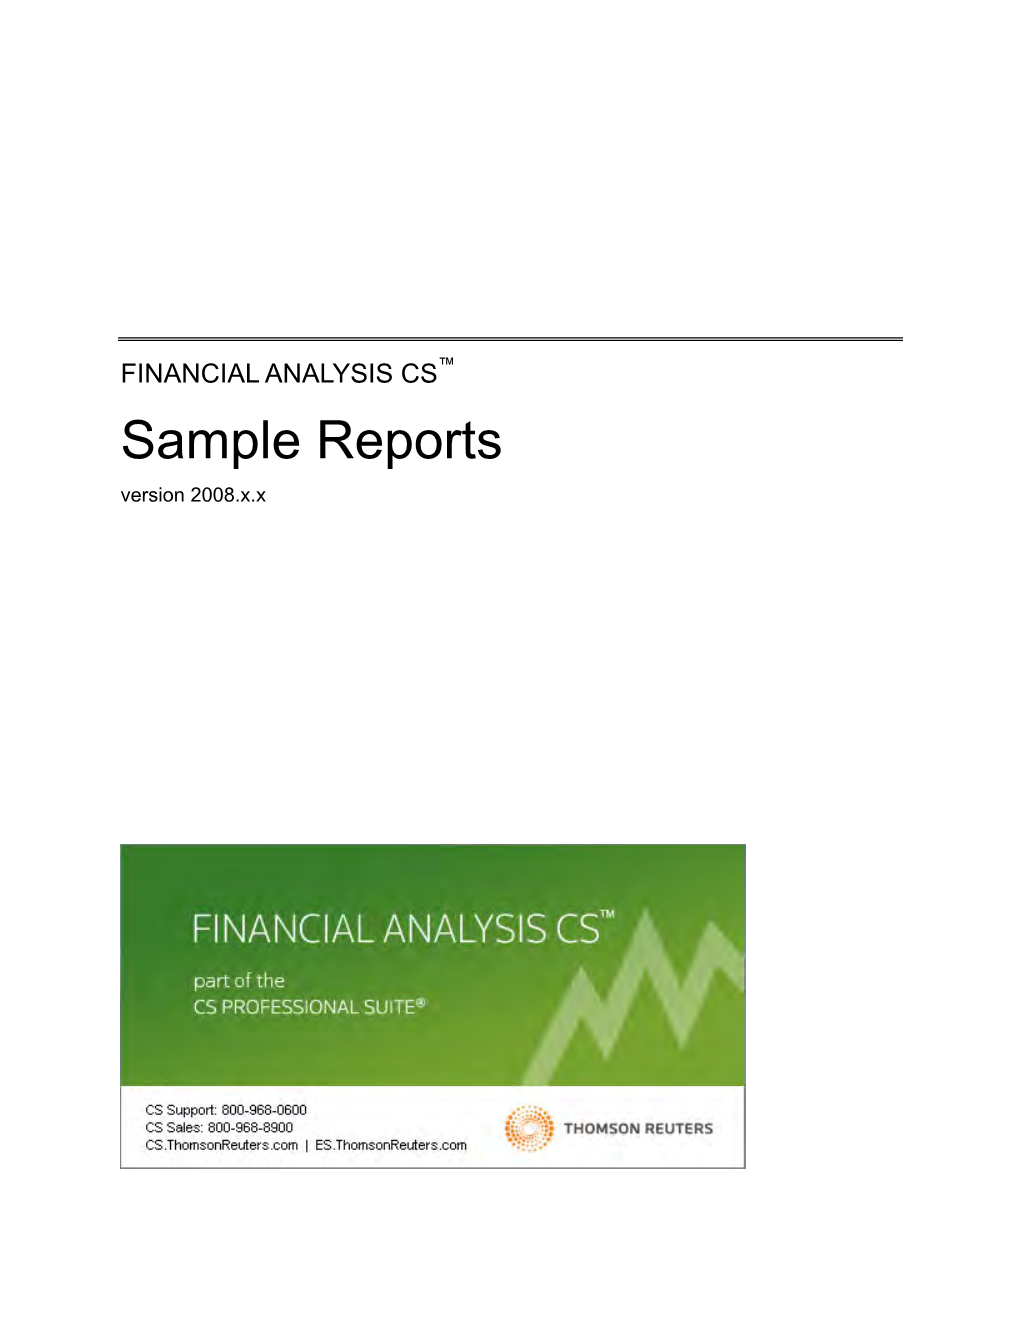 Financial Analysis CS Sample Reports (PDF)